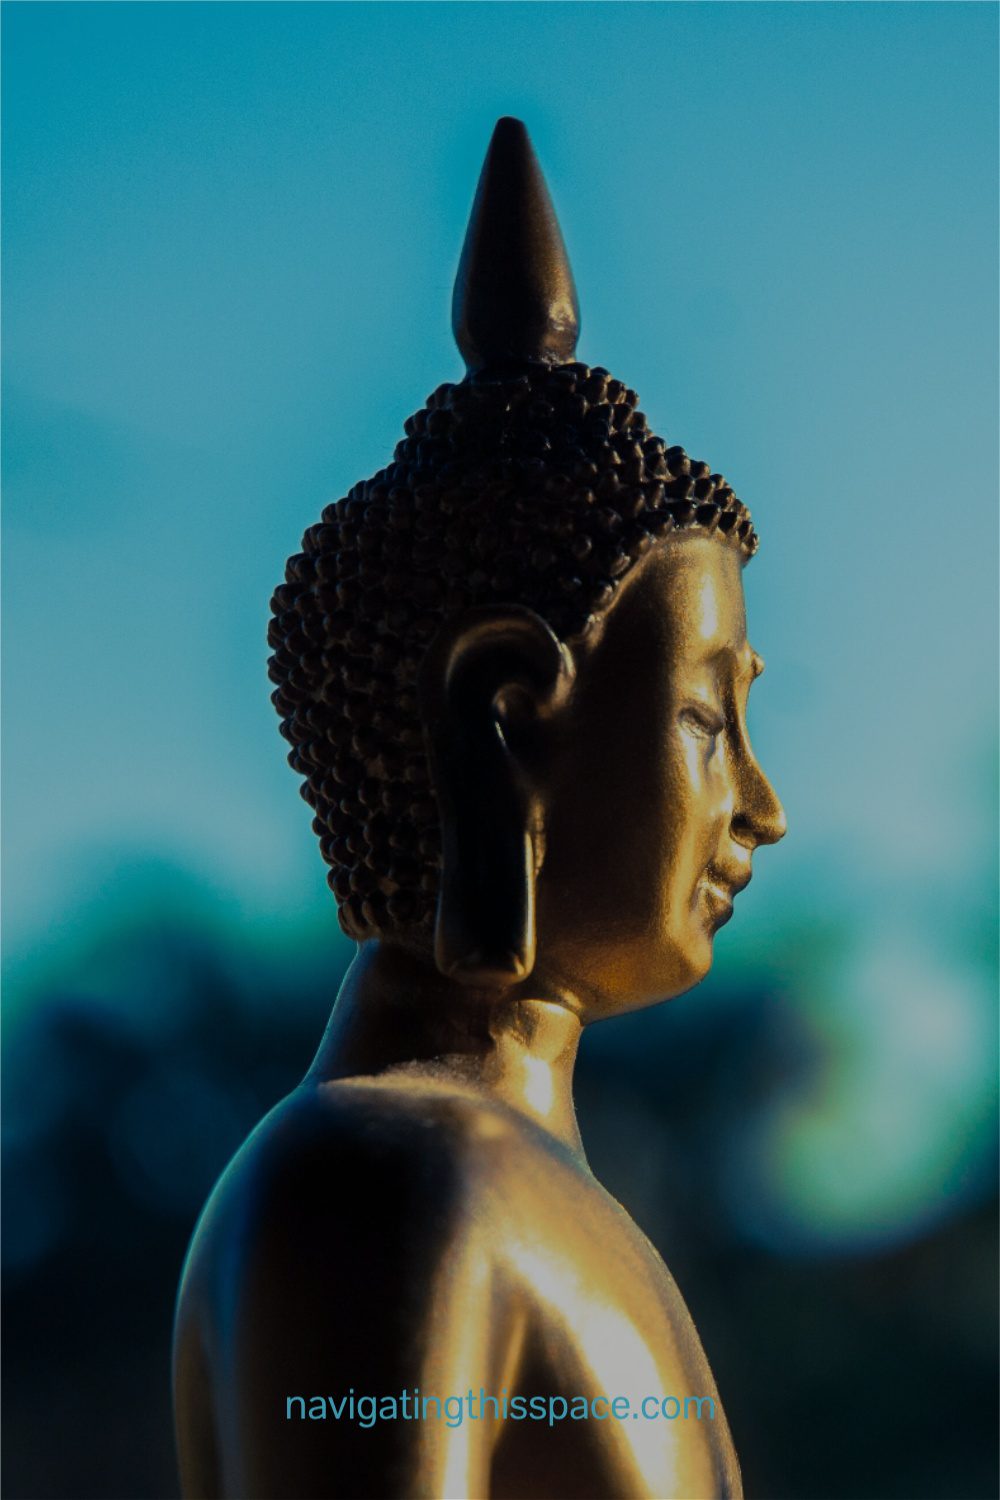 a golden buddha in meditation